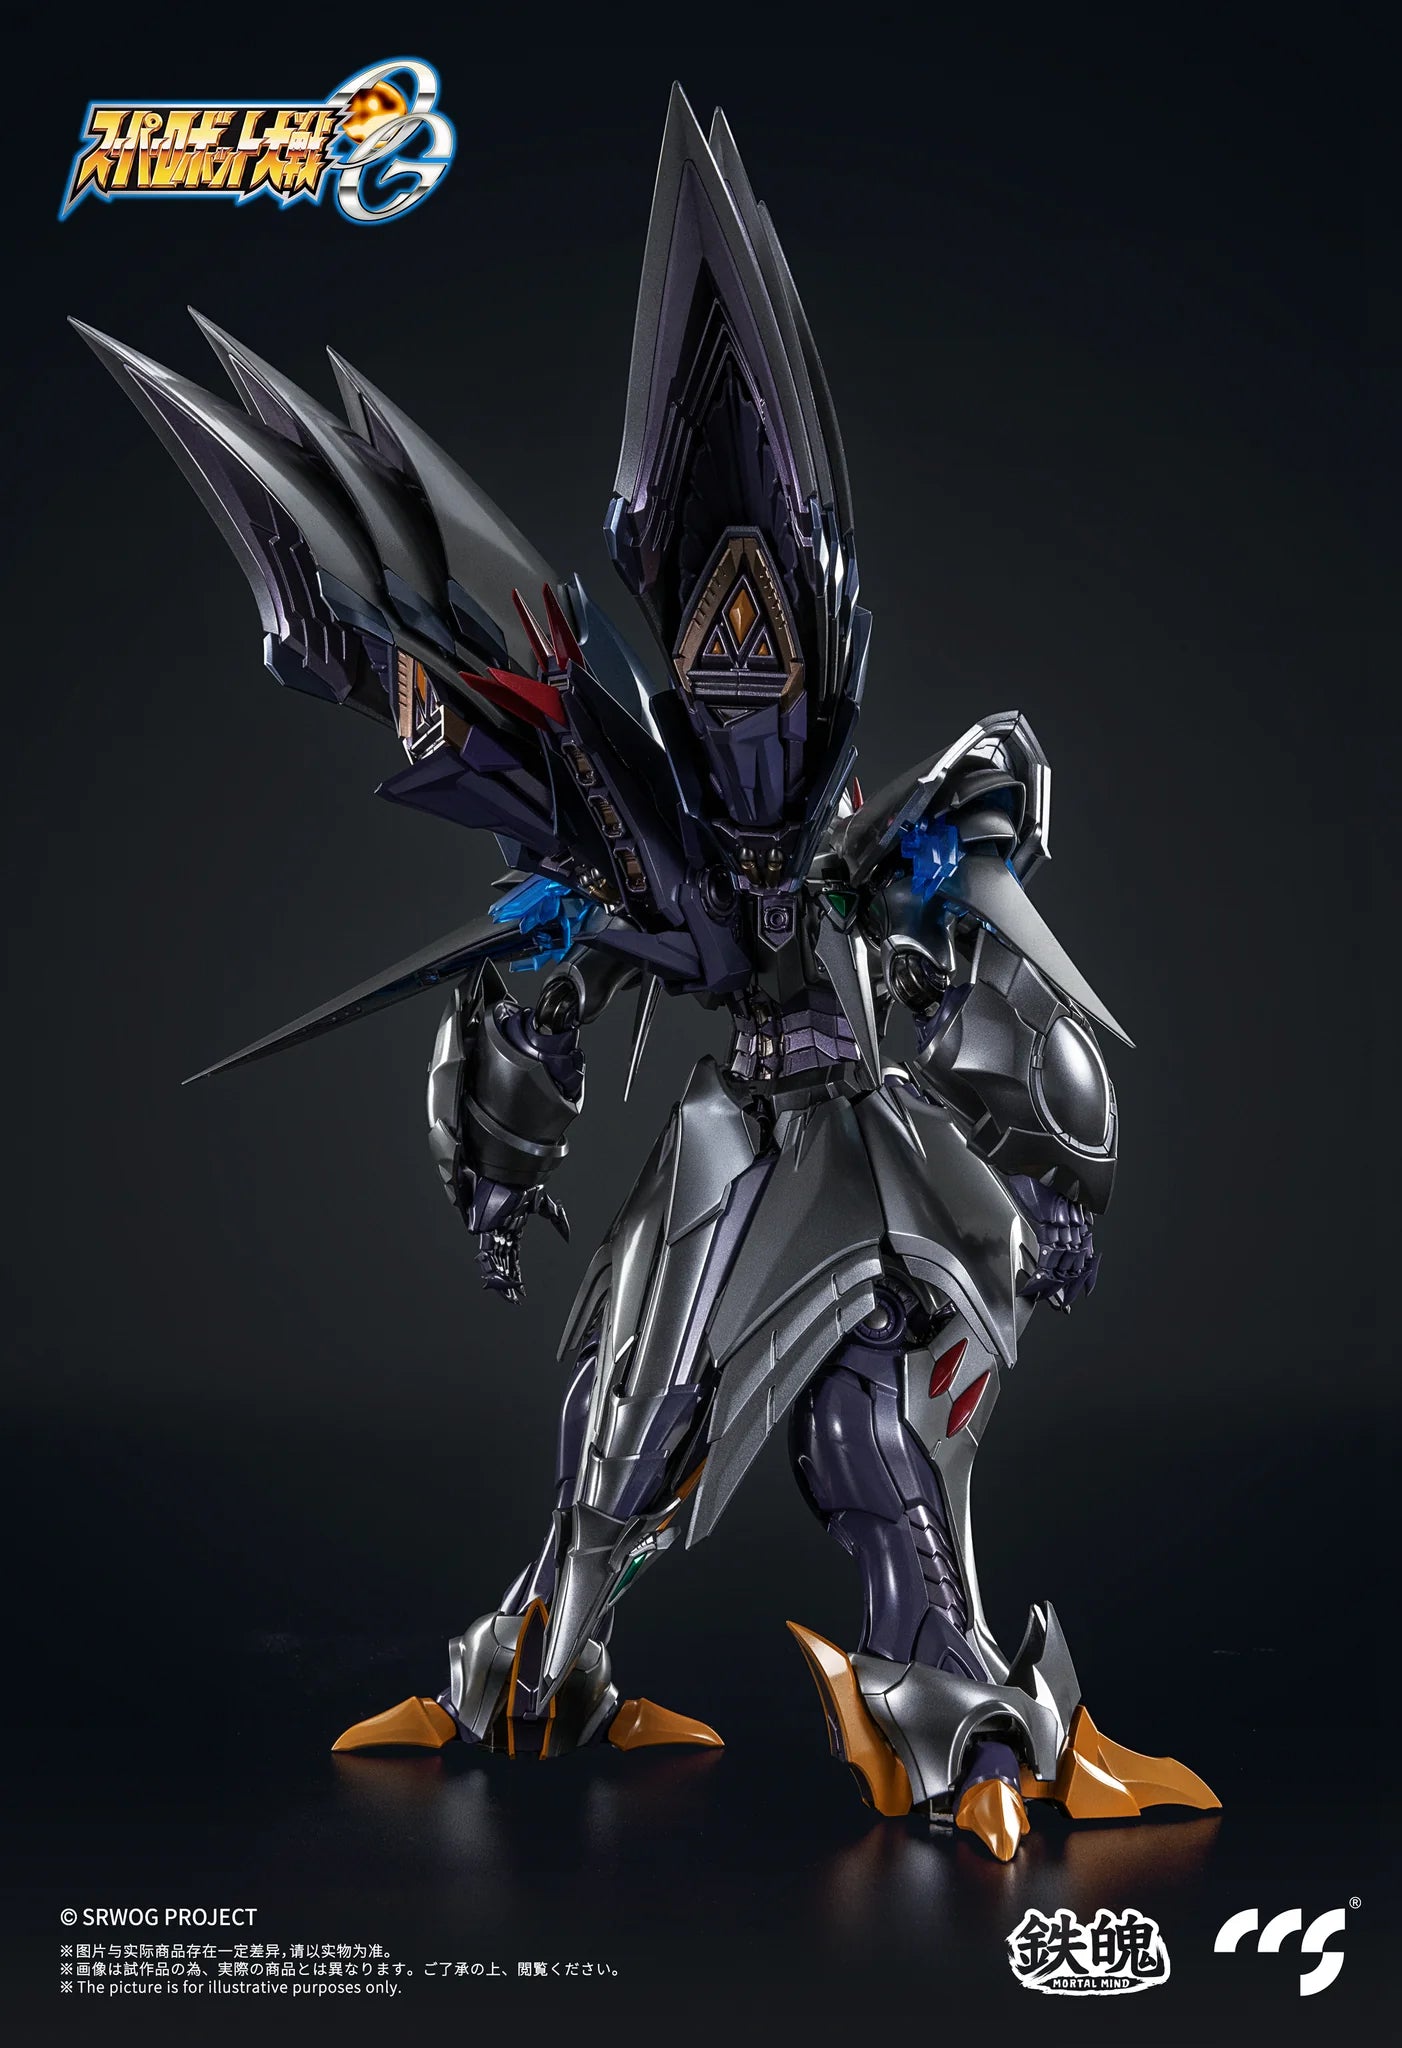 Diablos Armor Rage Set Monster Hunter 4 Play Arts Kai Action Figure model  G-Rank